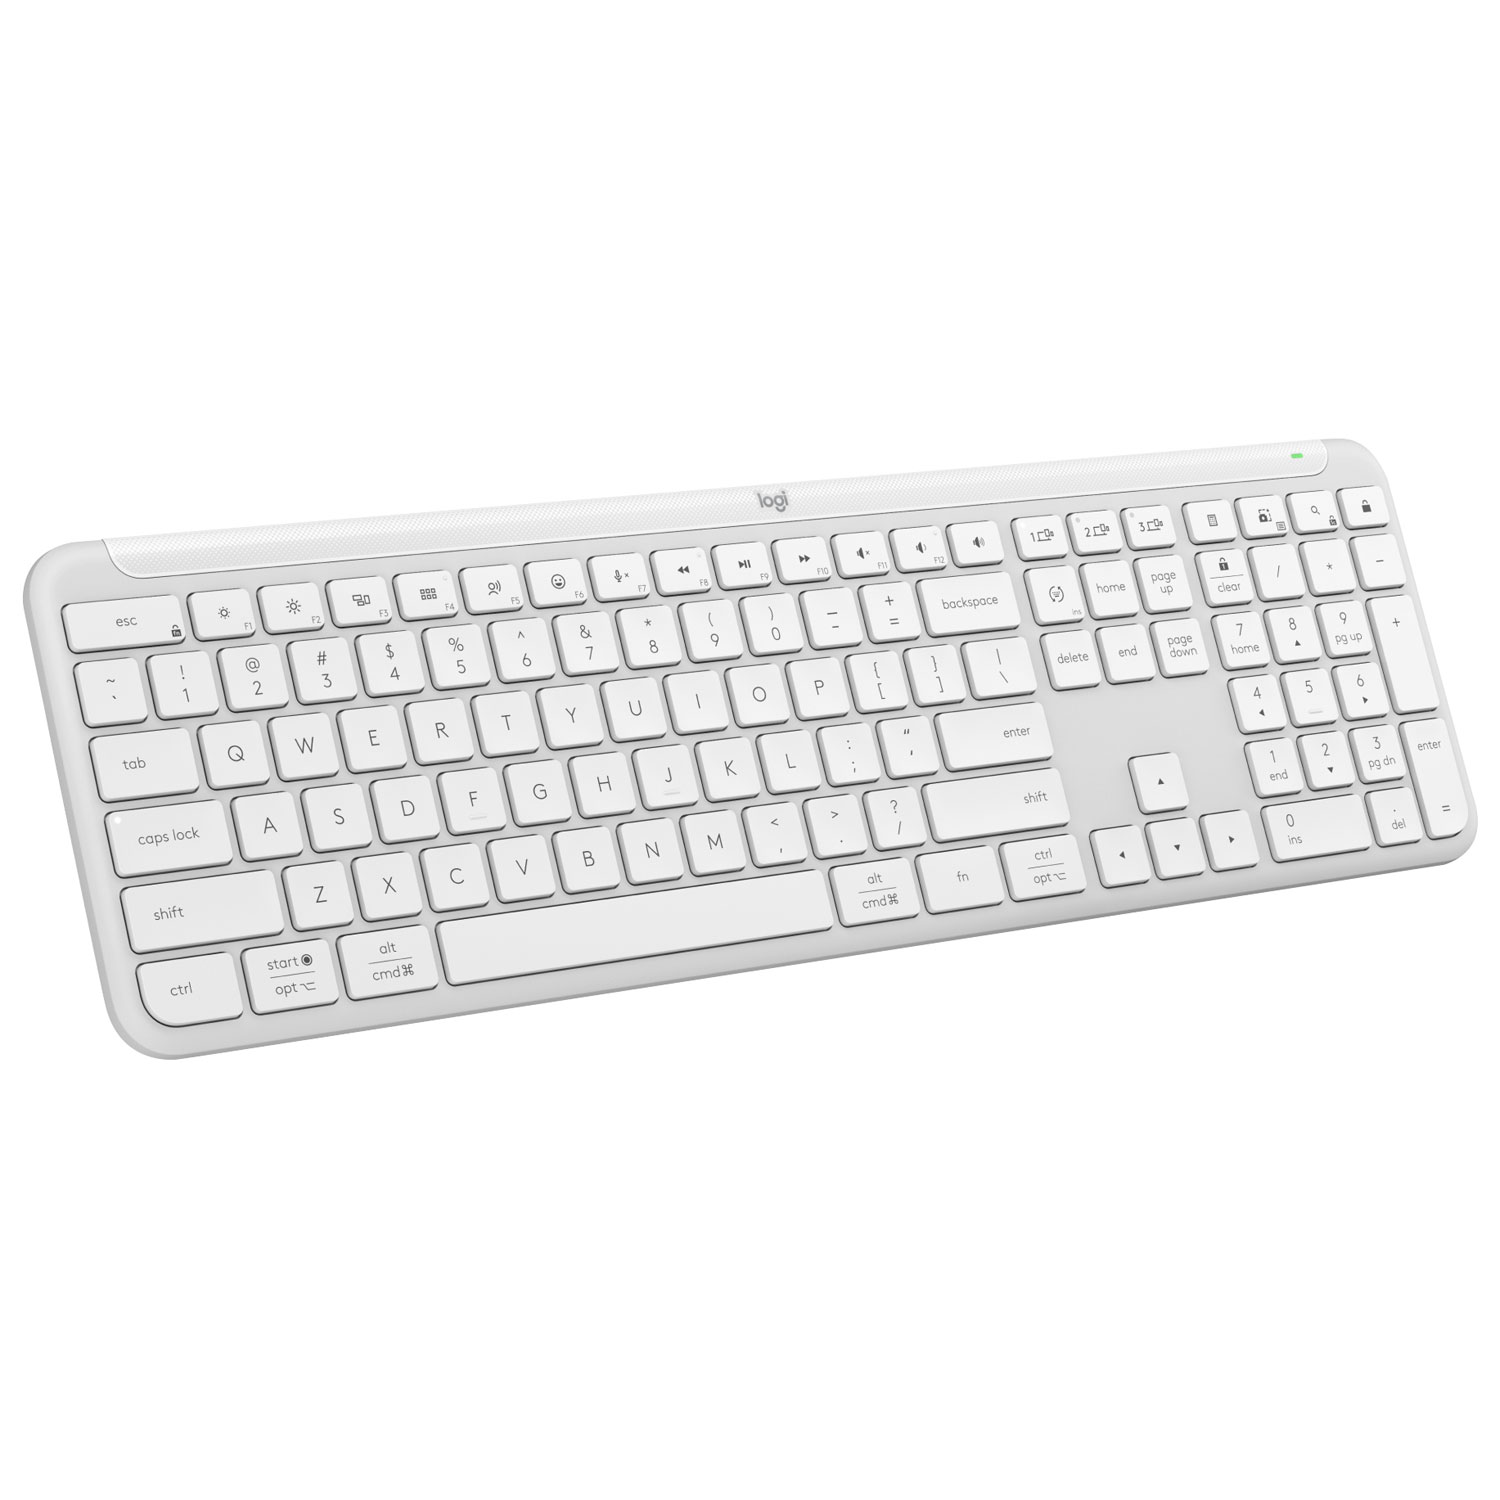 Logitech K950 Signature Slim Wireless Keyboard - Off-White - English - Only at Best Buy